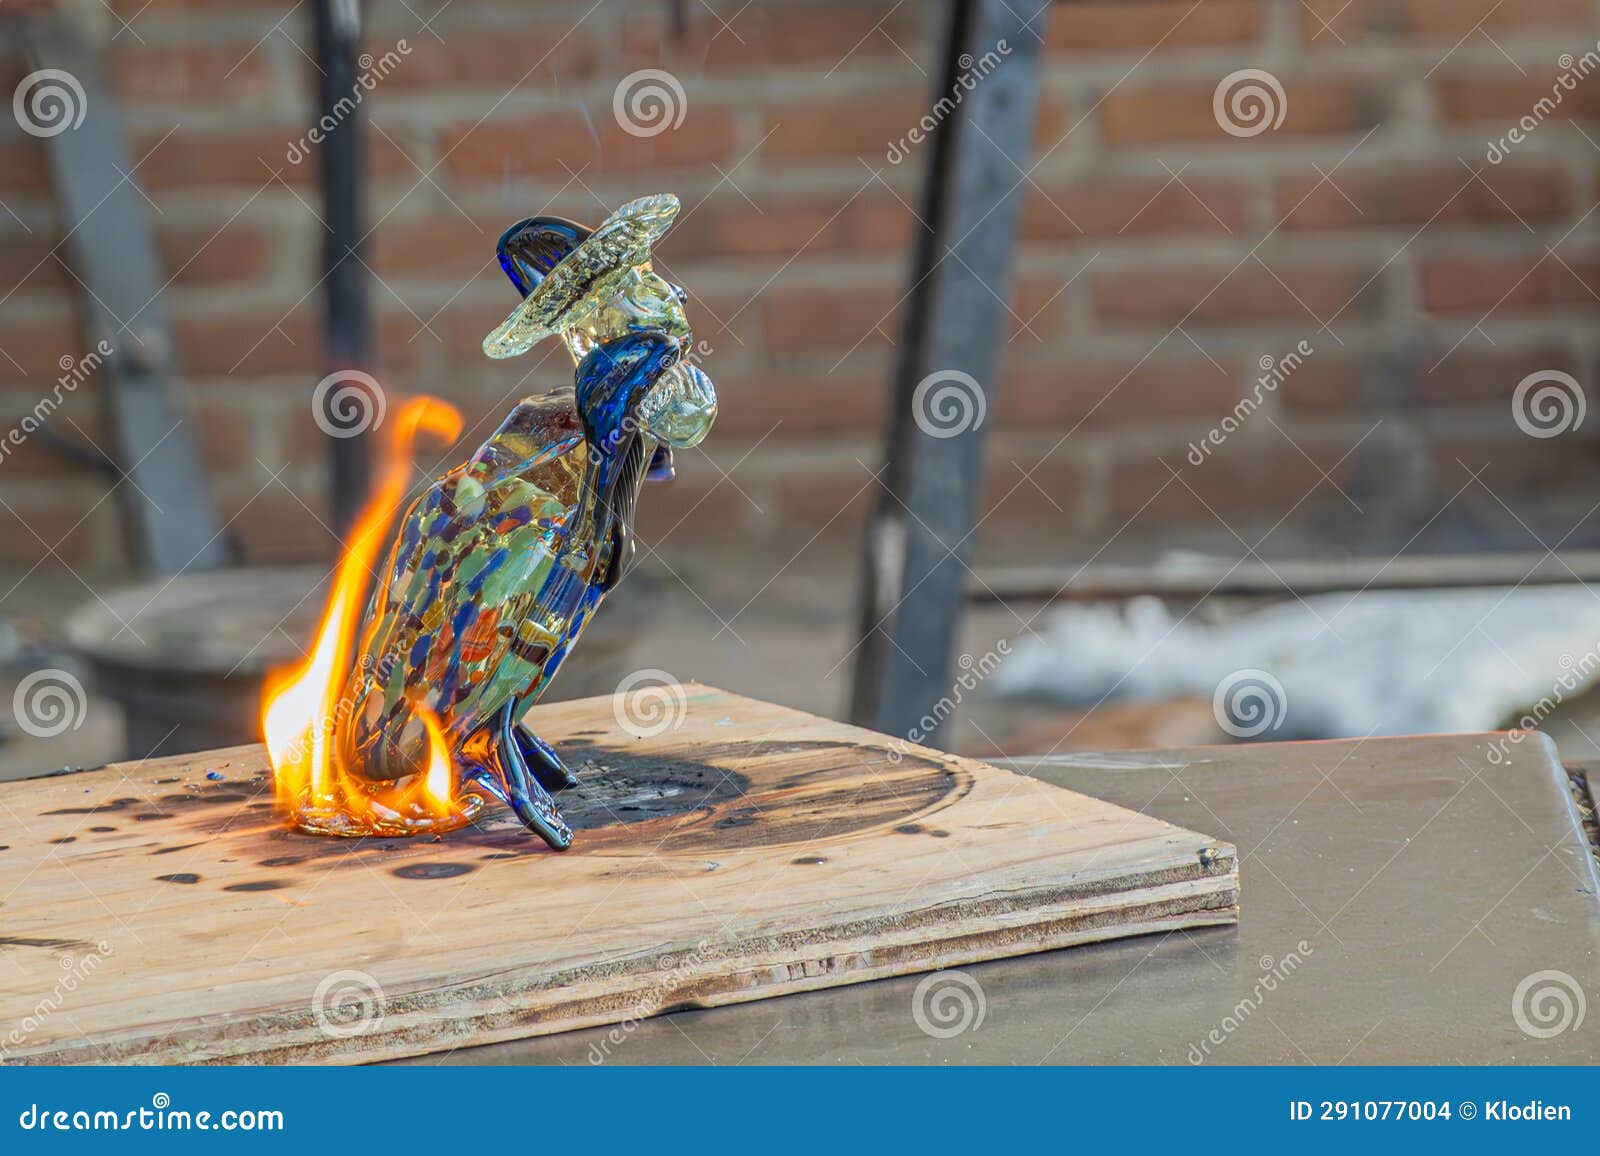 burning turtle closeup, fabrica de vidrio soplado, cabo san lucas, mexico